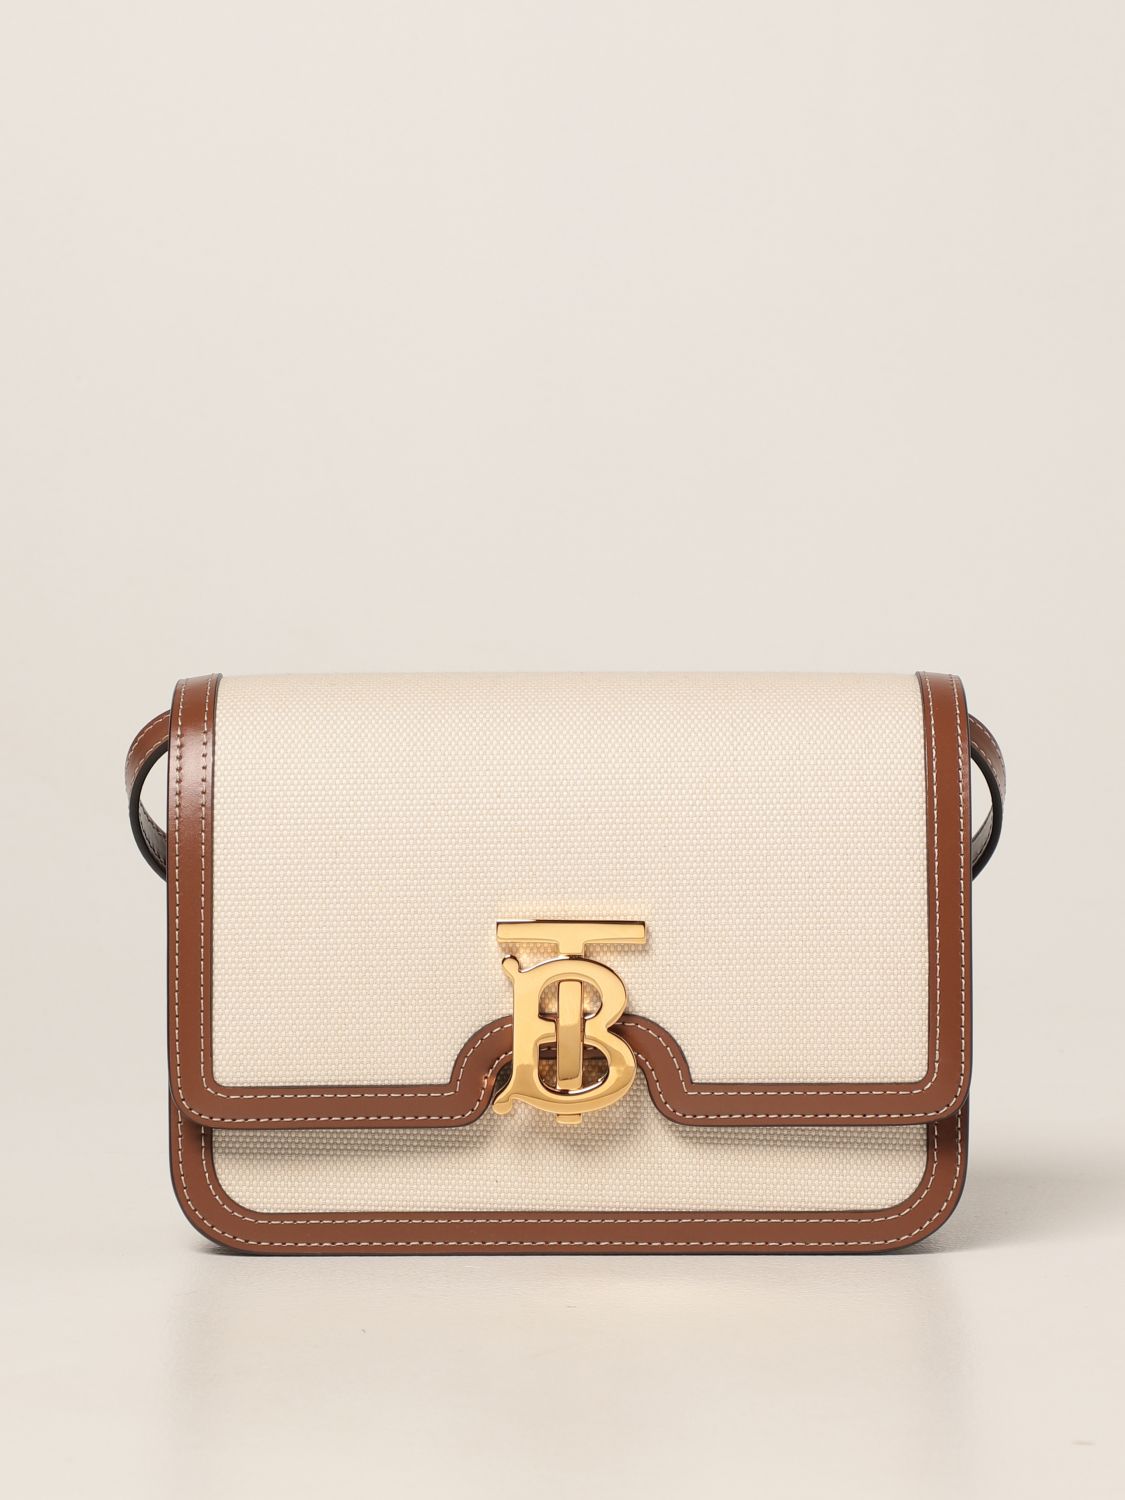 Designer Shoulder Bags for Women | Burberry® Official